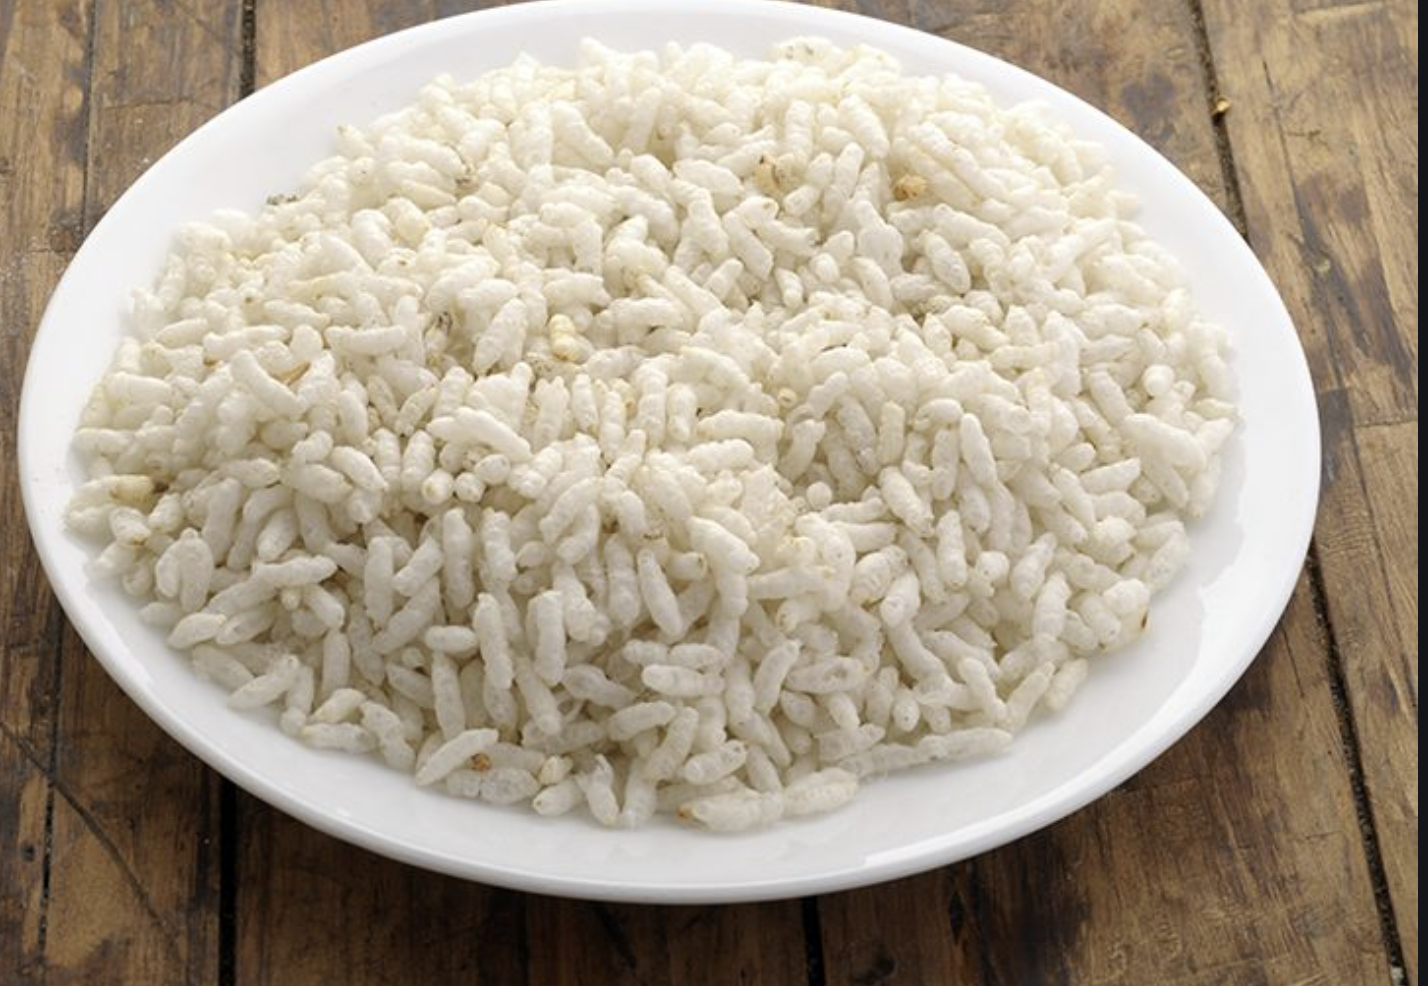 murmura Puffed rice